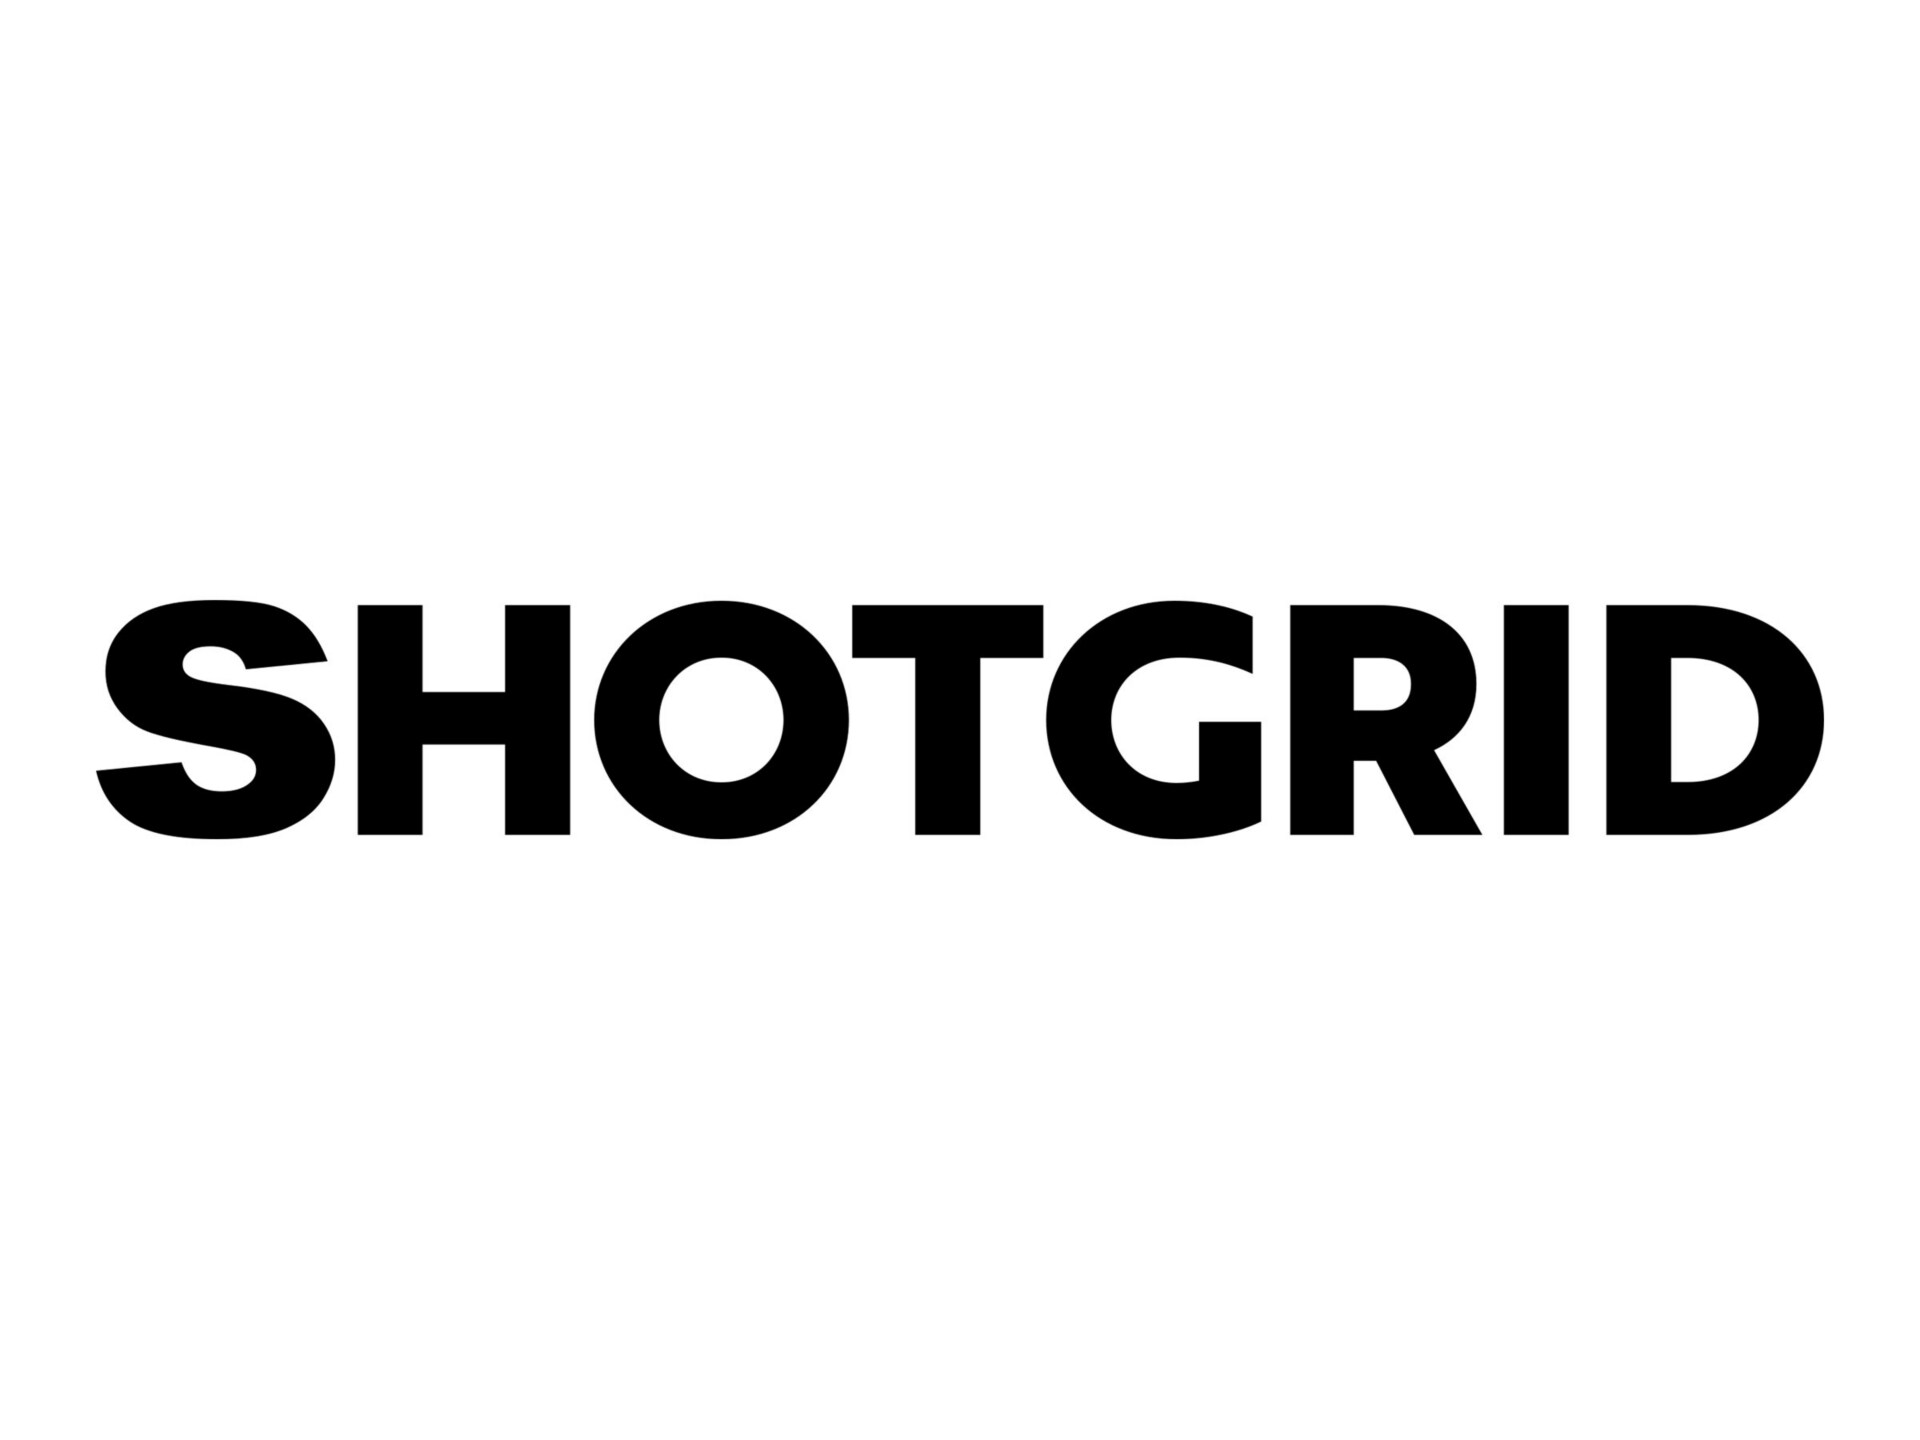 Autodesk ShotGrid - New Subscription (18 months) - 1 seat